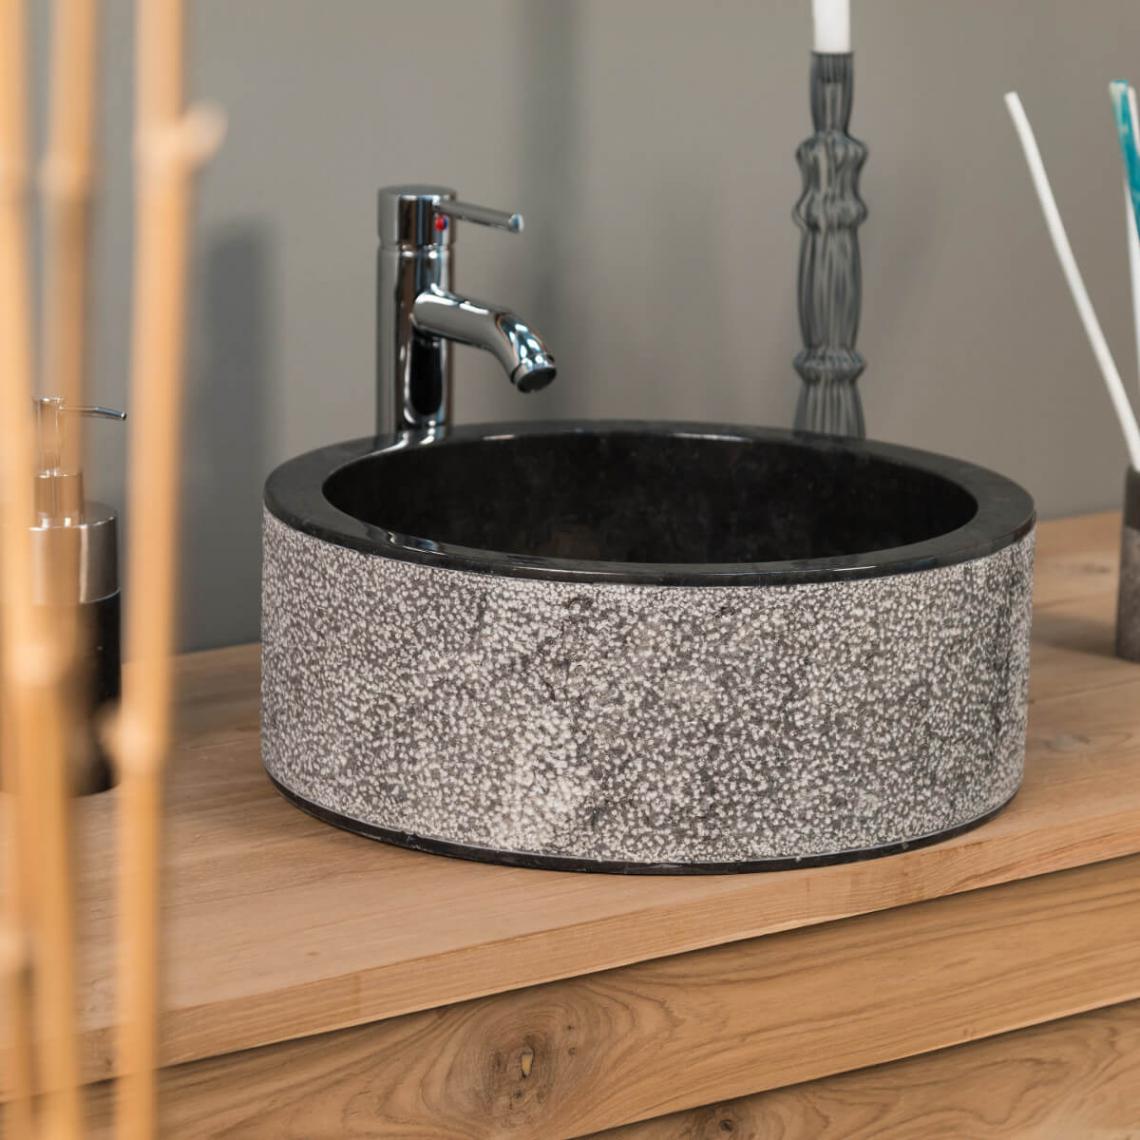 Wanda Collection - Vasque salle de bain en marbre ELBE noir 40cm - Vasque